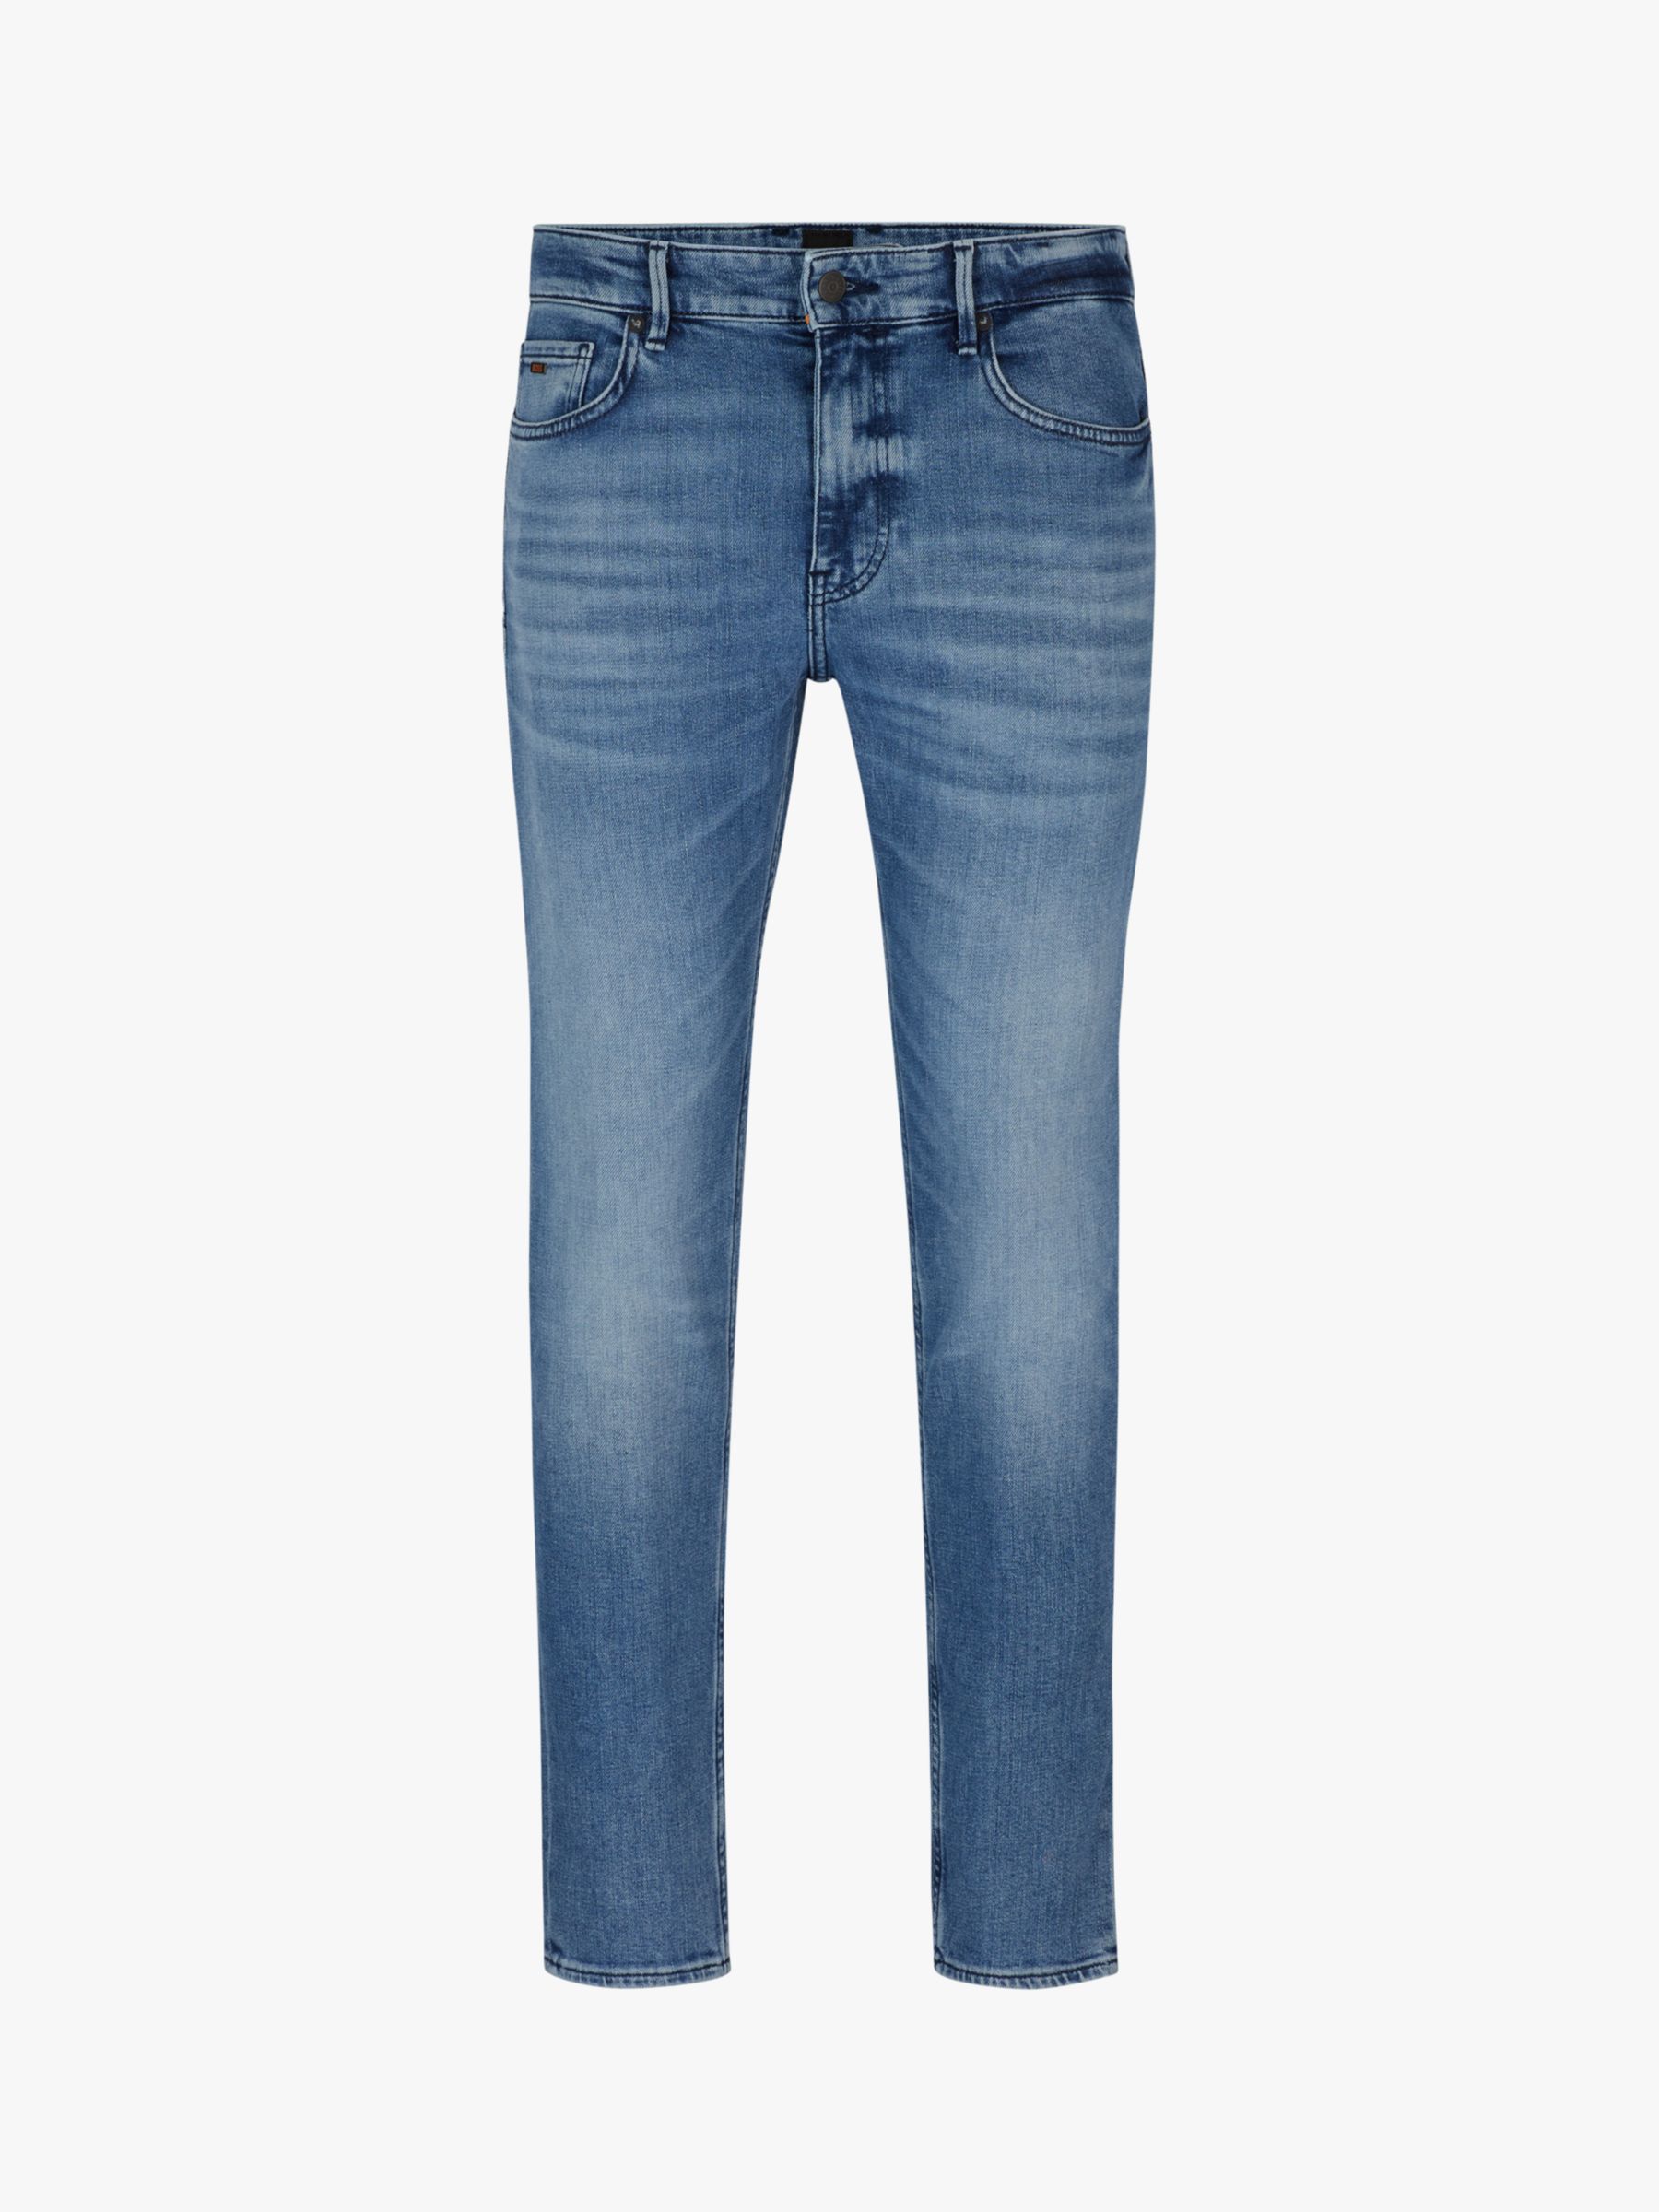 BOSS Delano Slim Fit Jeans, Blue, 30R